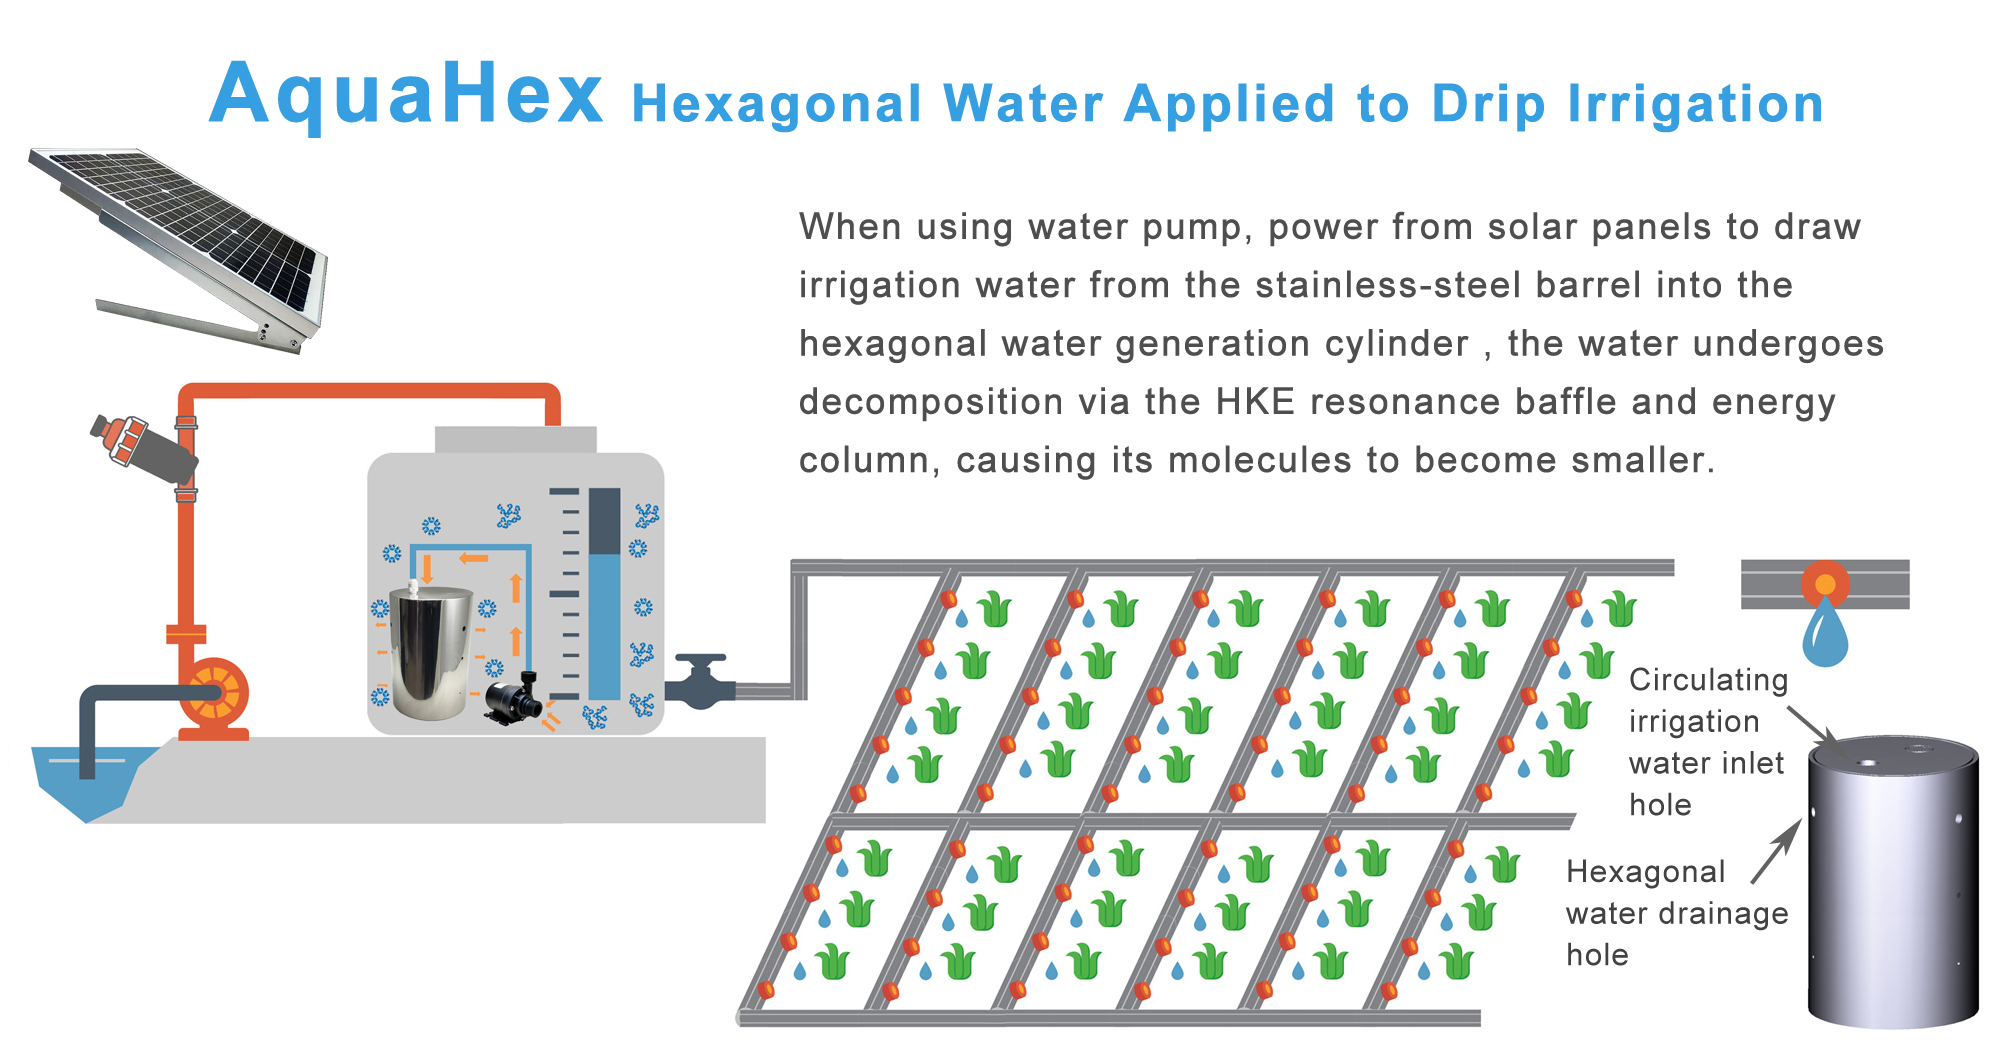 AquaHex hexagonal water applied to drip irrigation